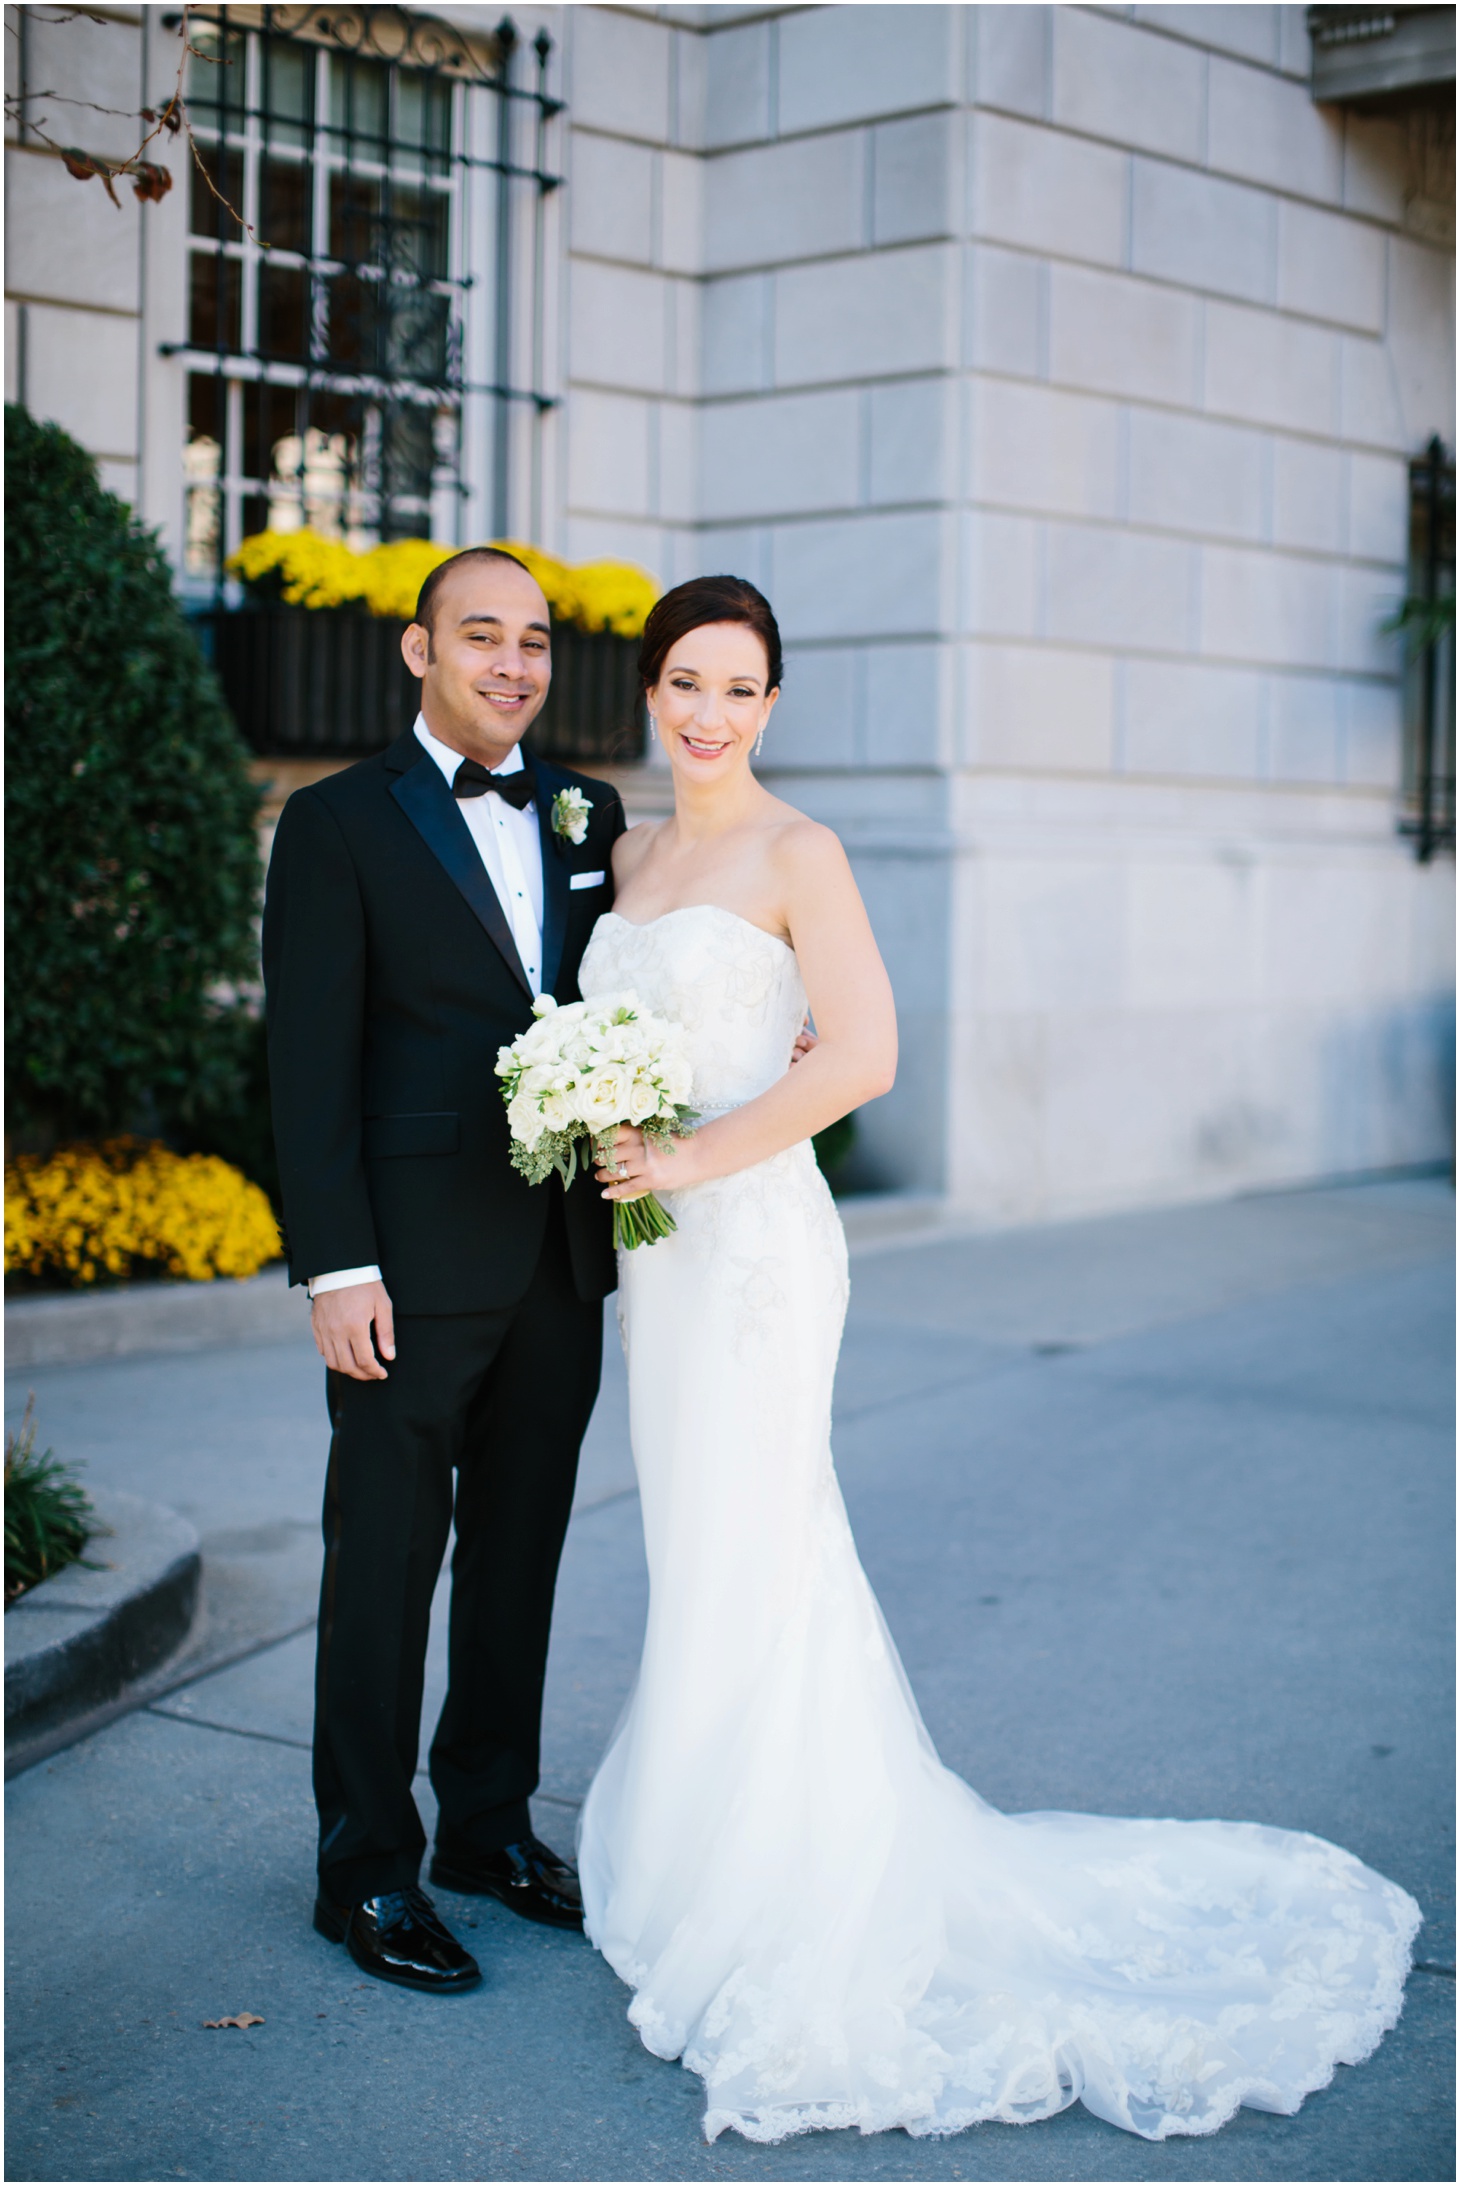 Iconic Black Tie Wedding at Hay-Adams Hotel in Washington, DC. Photography by Sarah Bradshaw Photography.